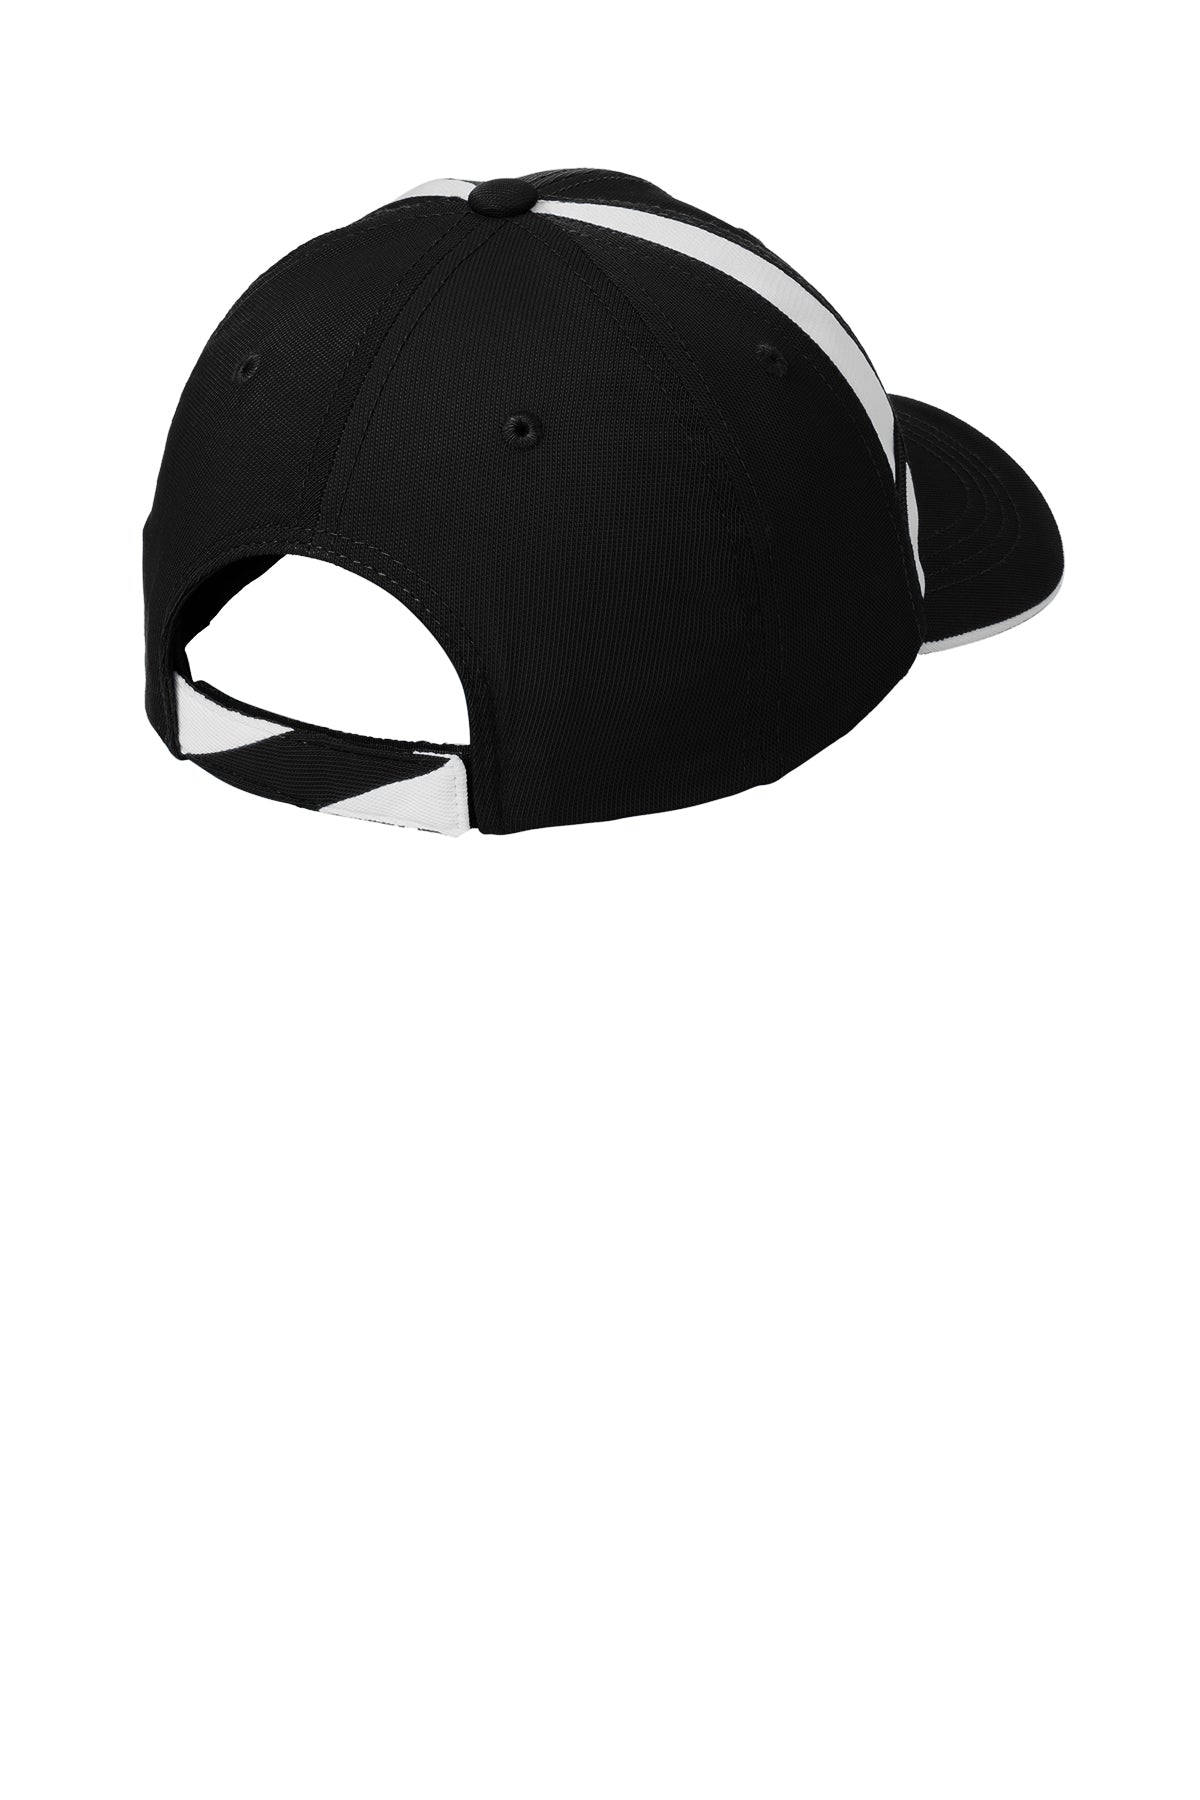 Sport-Tek Dry Zone Customized Mesh Inset Caps, Black/White